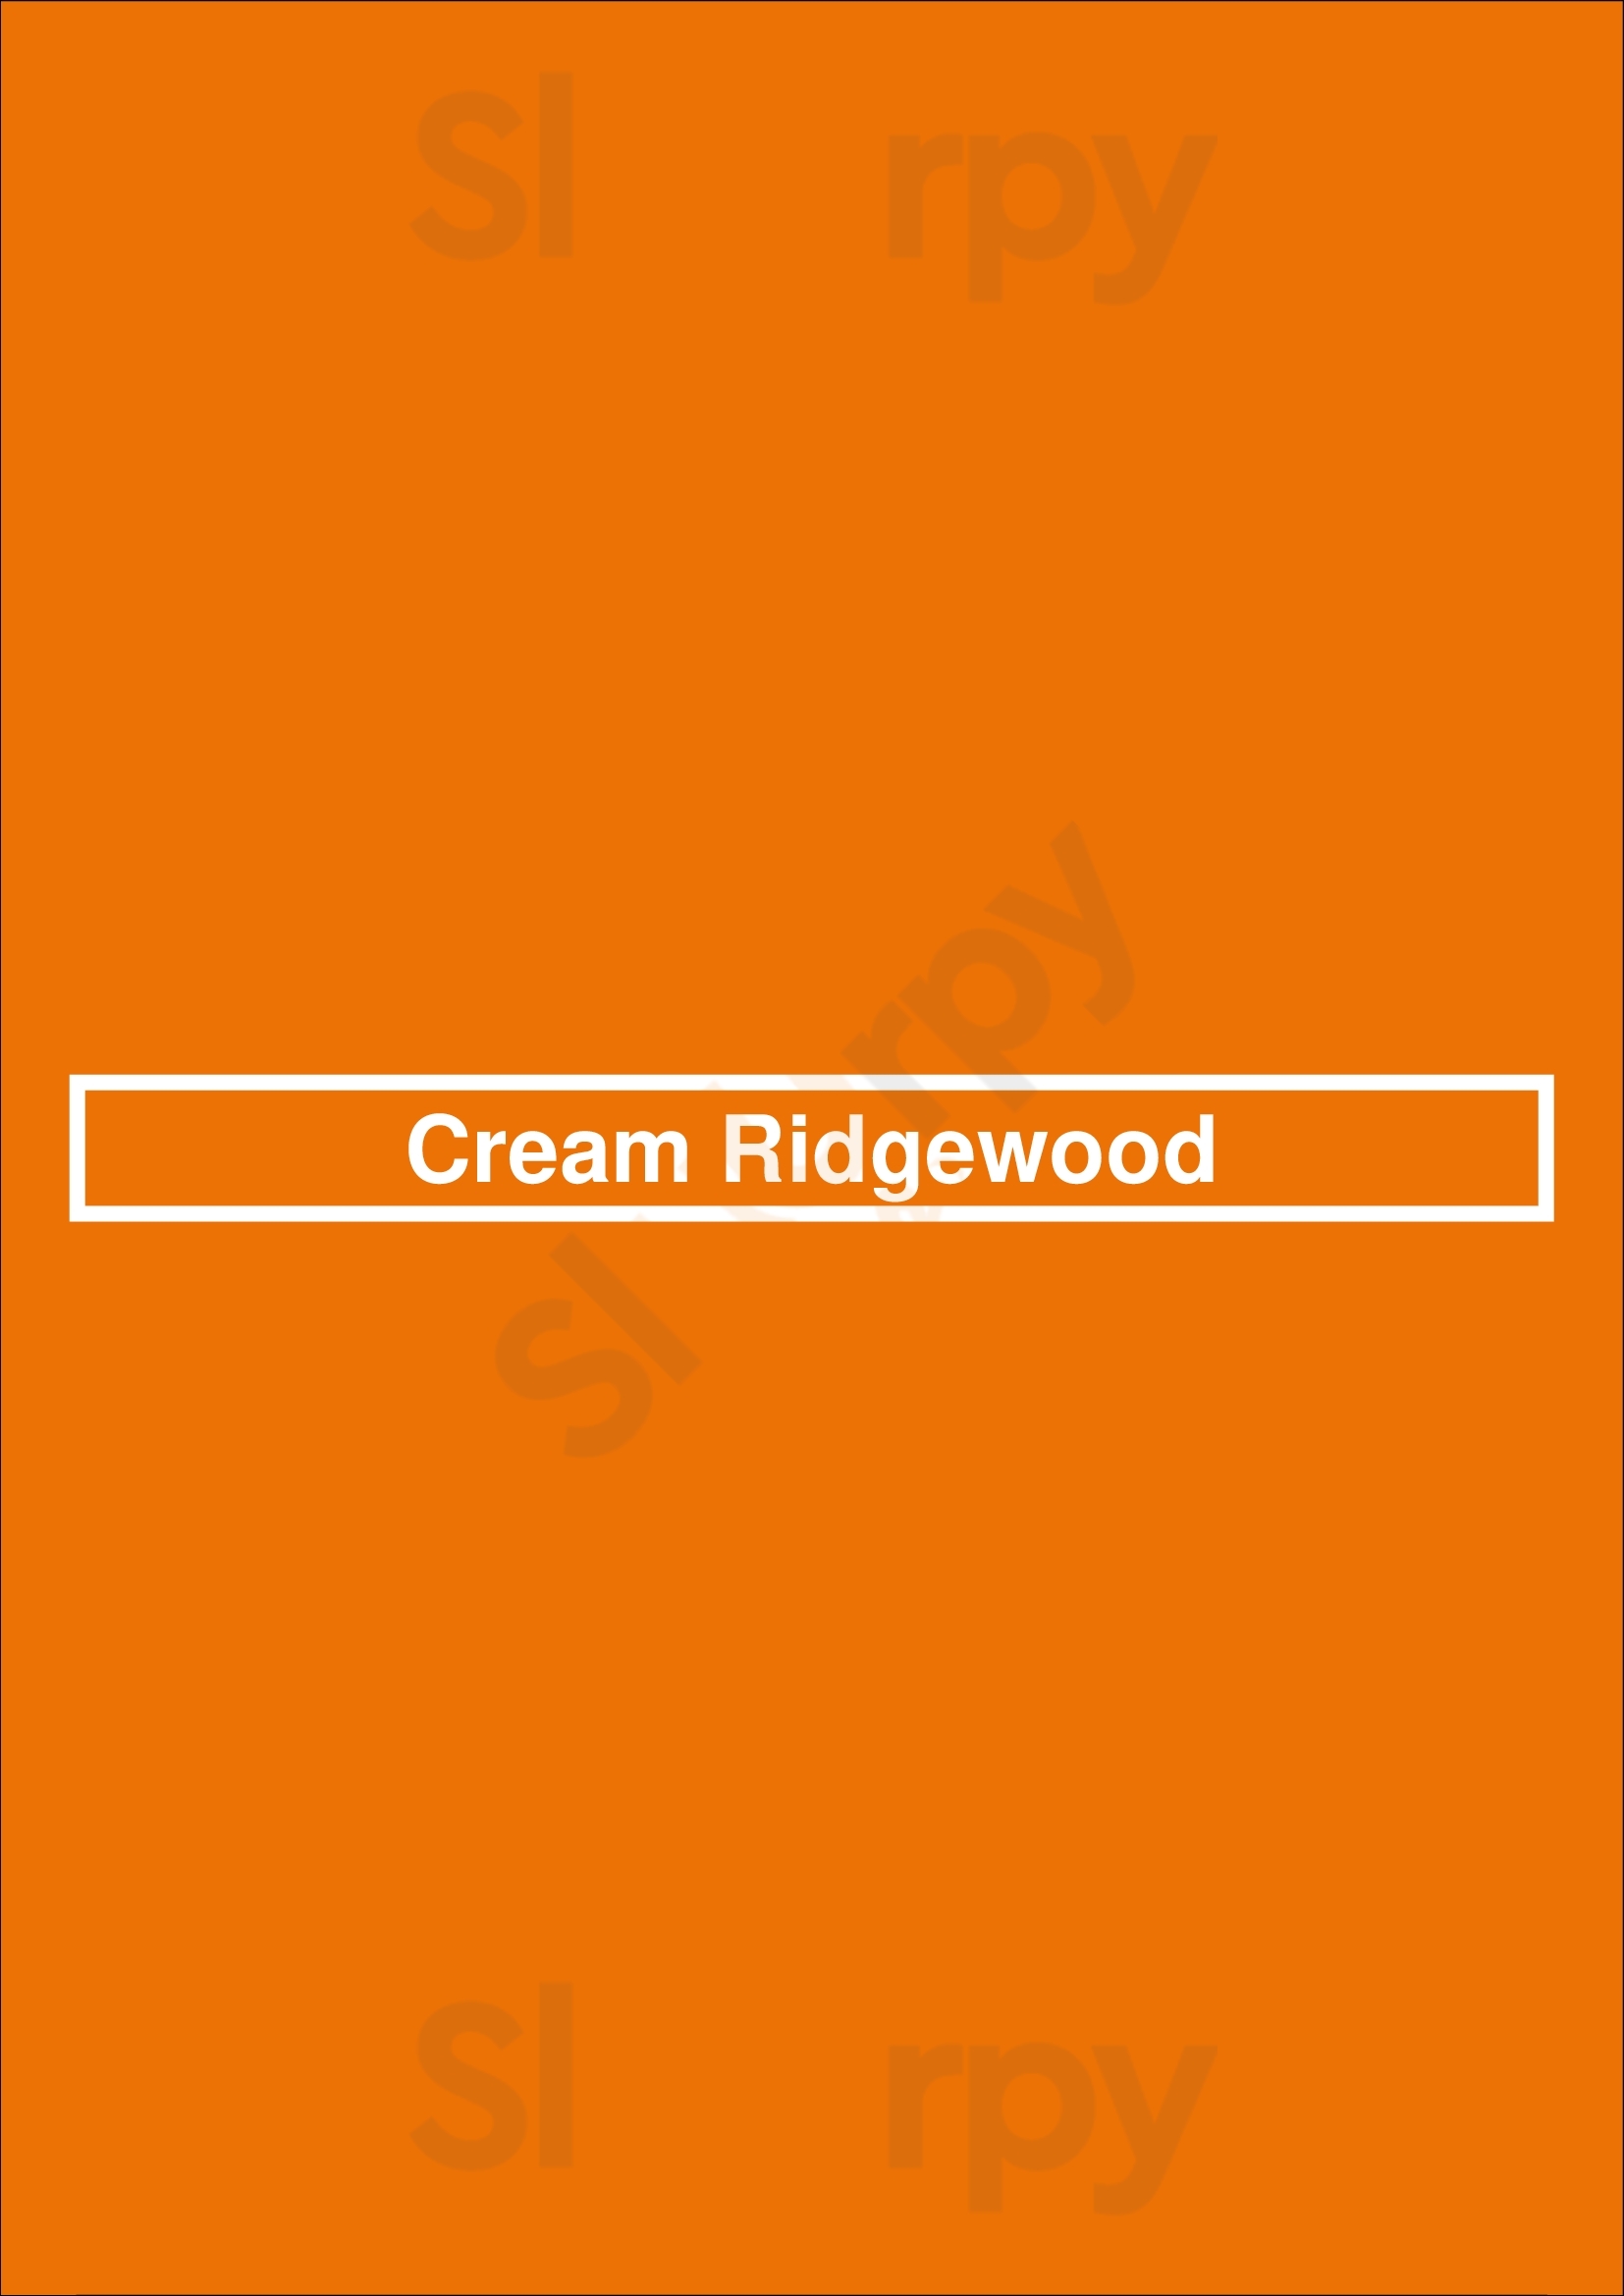 Cream Ridgewood Glendale Menu - 1